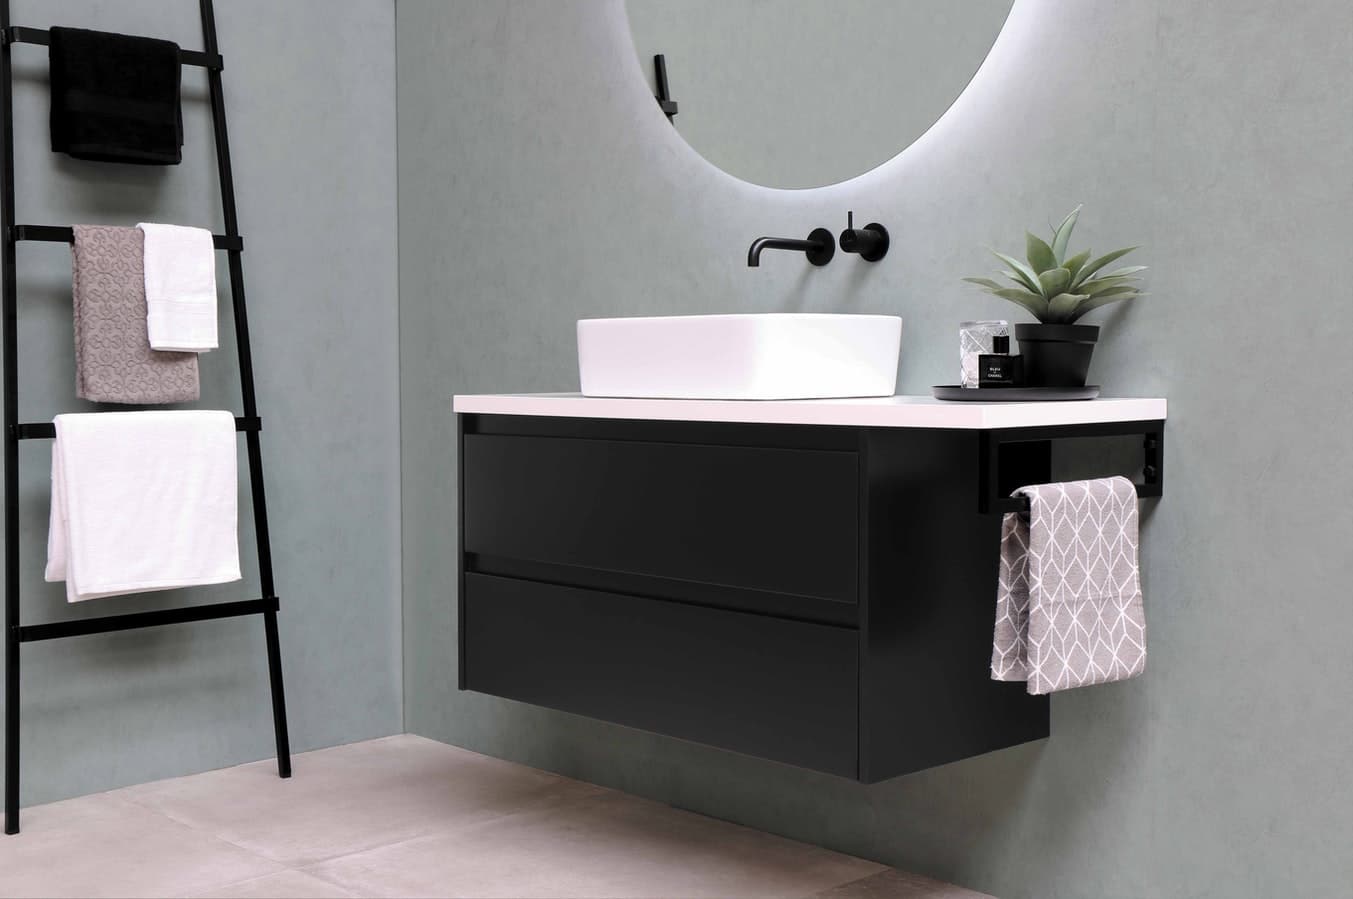 Contemporary bathroom design with modern sink & mirror